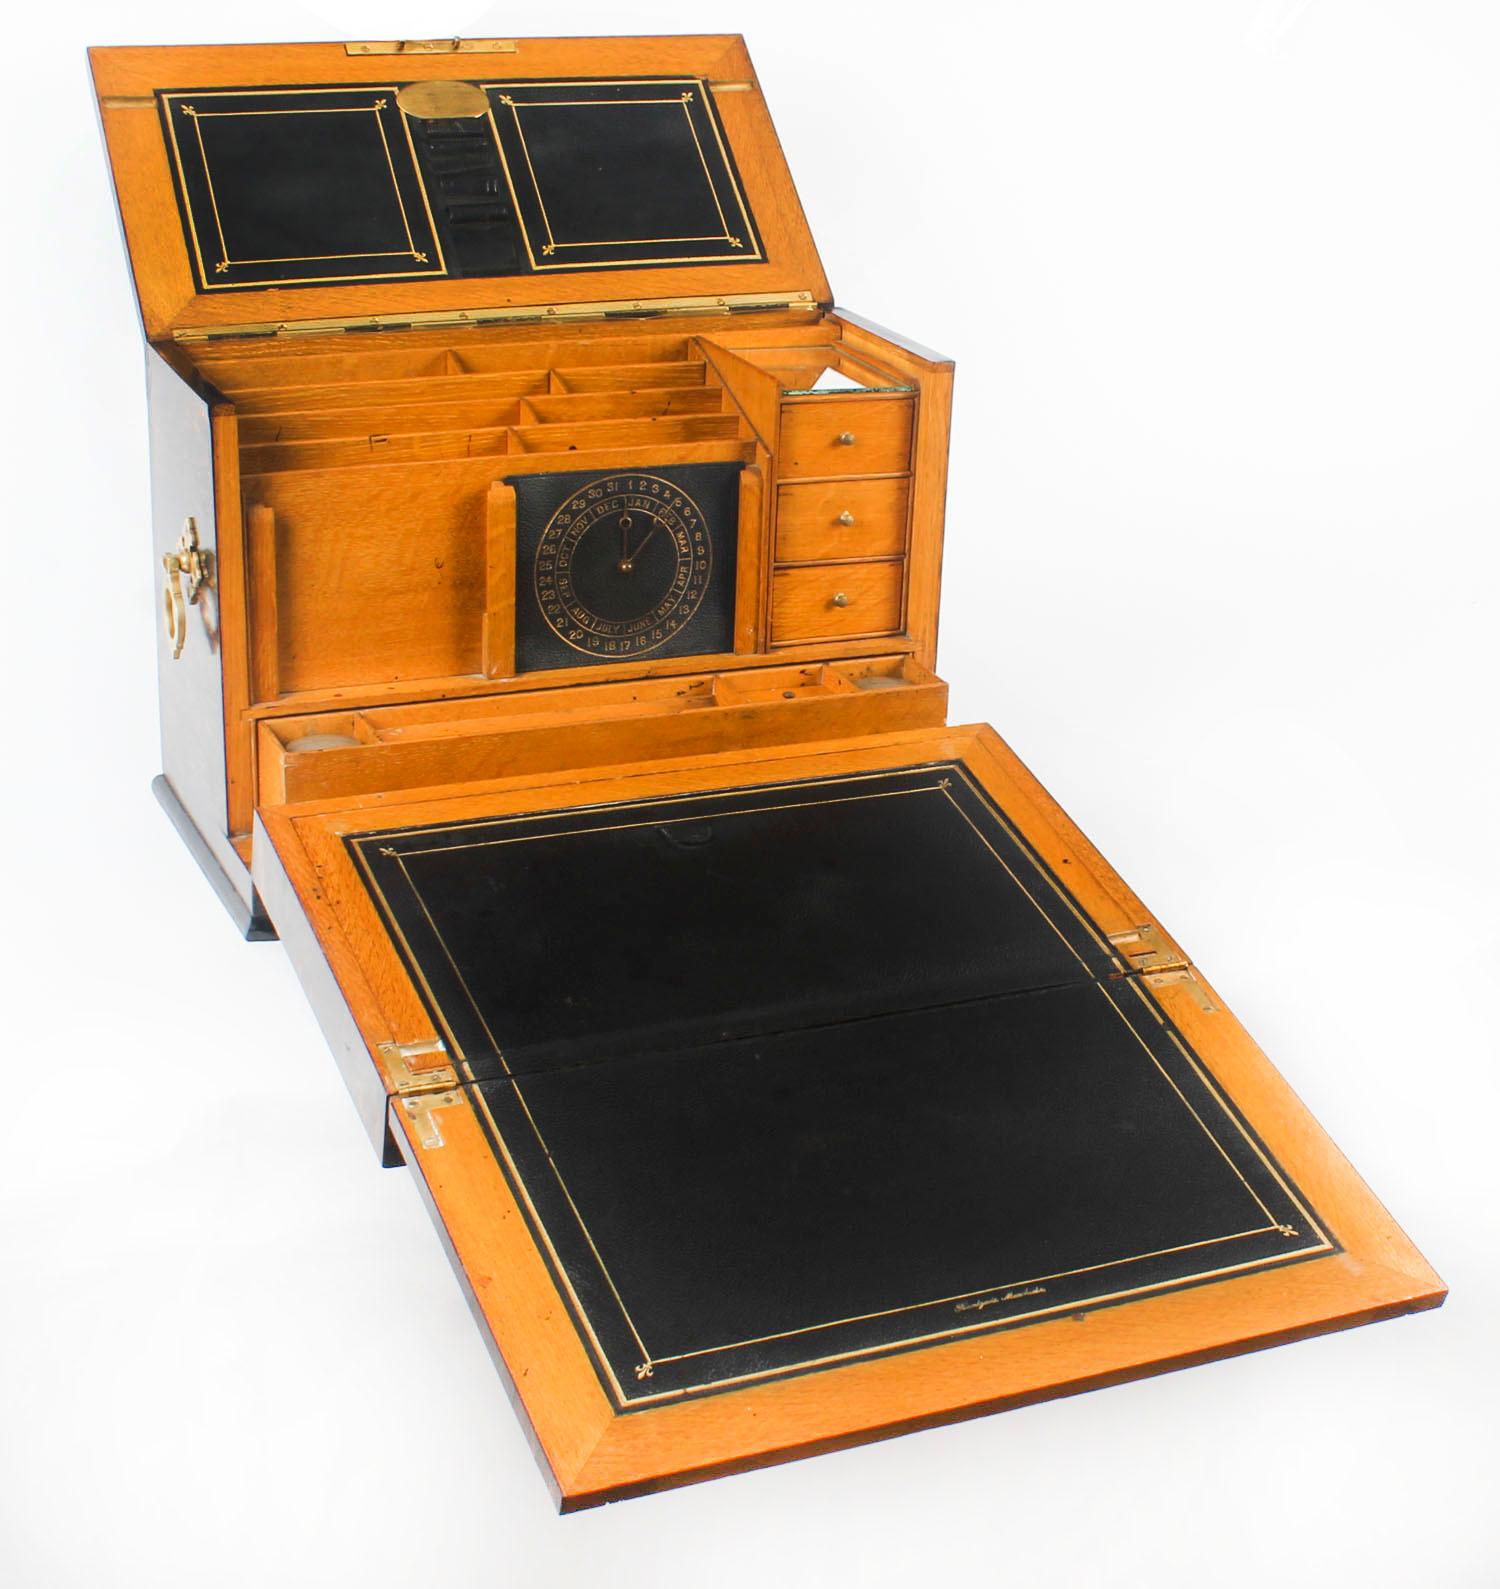 English Antique Coromandel Gothic Revival Travelling Writing Box, 19th Century